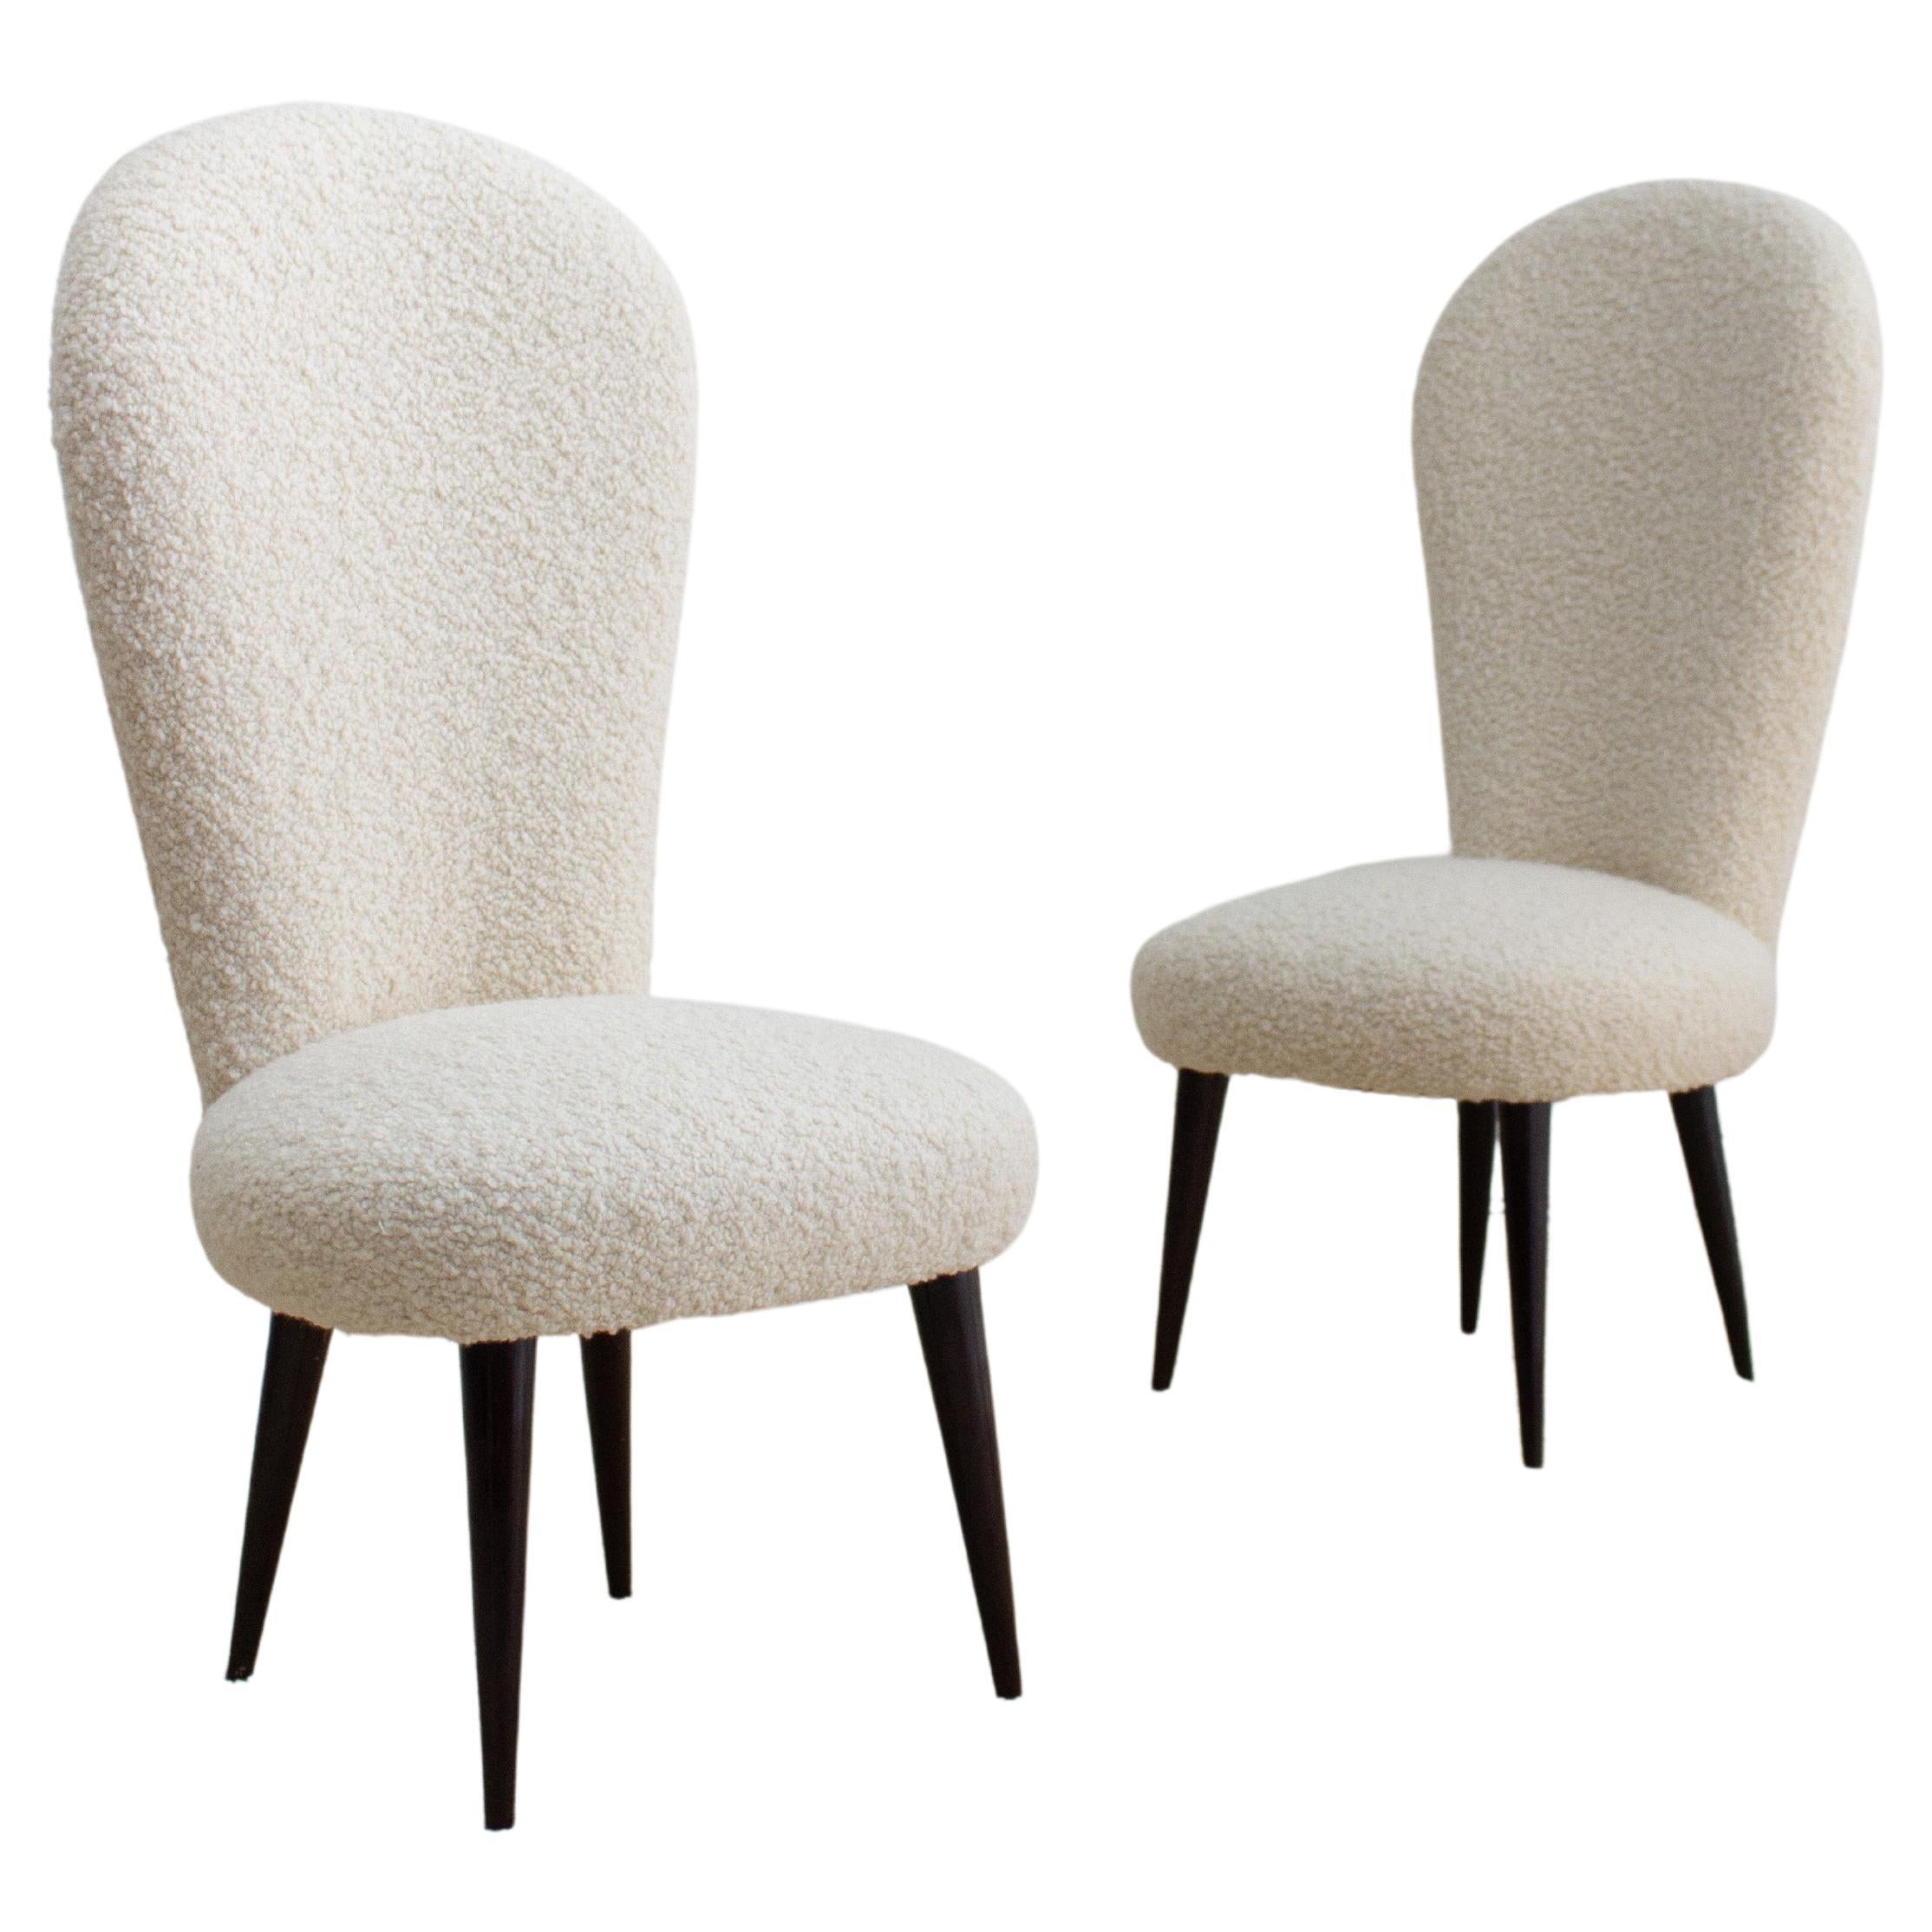 High Back Italian Chairs in Cream Bouclé - a Pair